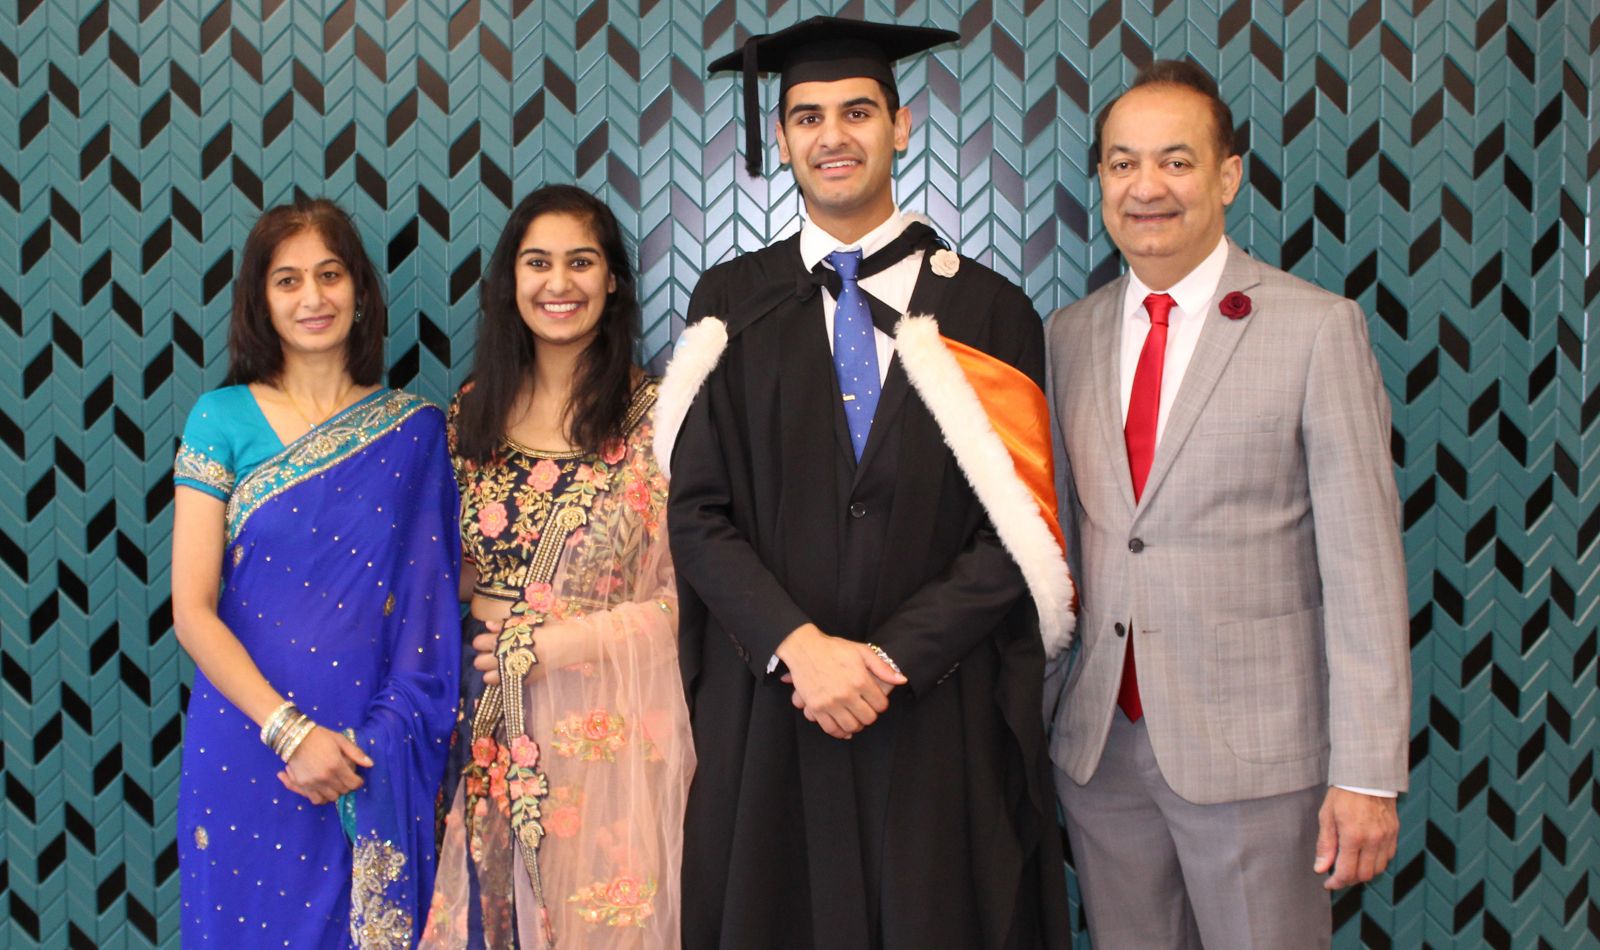 Bhavin celebrates graduation with his mother Nikita Parshottam (left), his sister Pooja Parshottam (second left), and his father Nitin Parshottam (right).